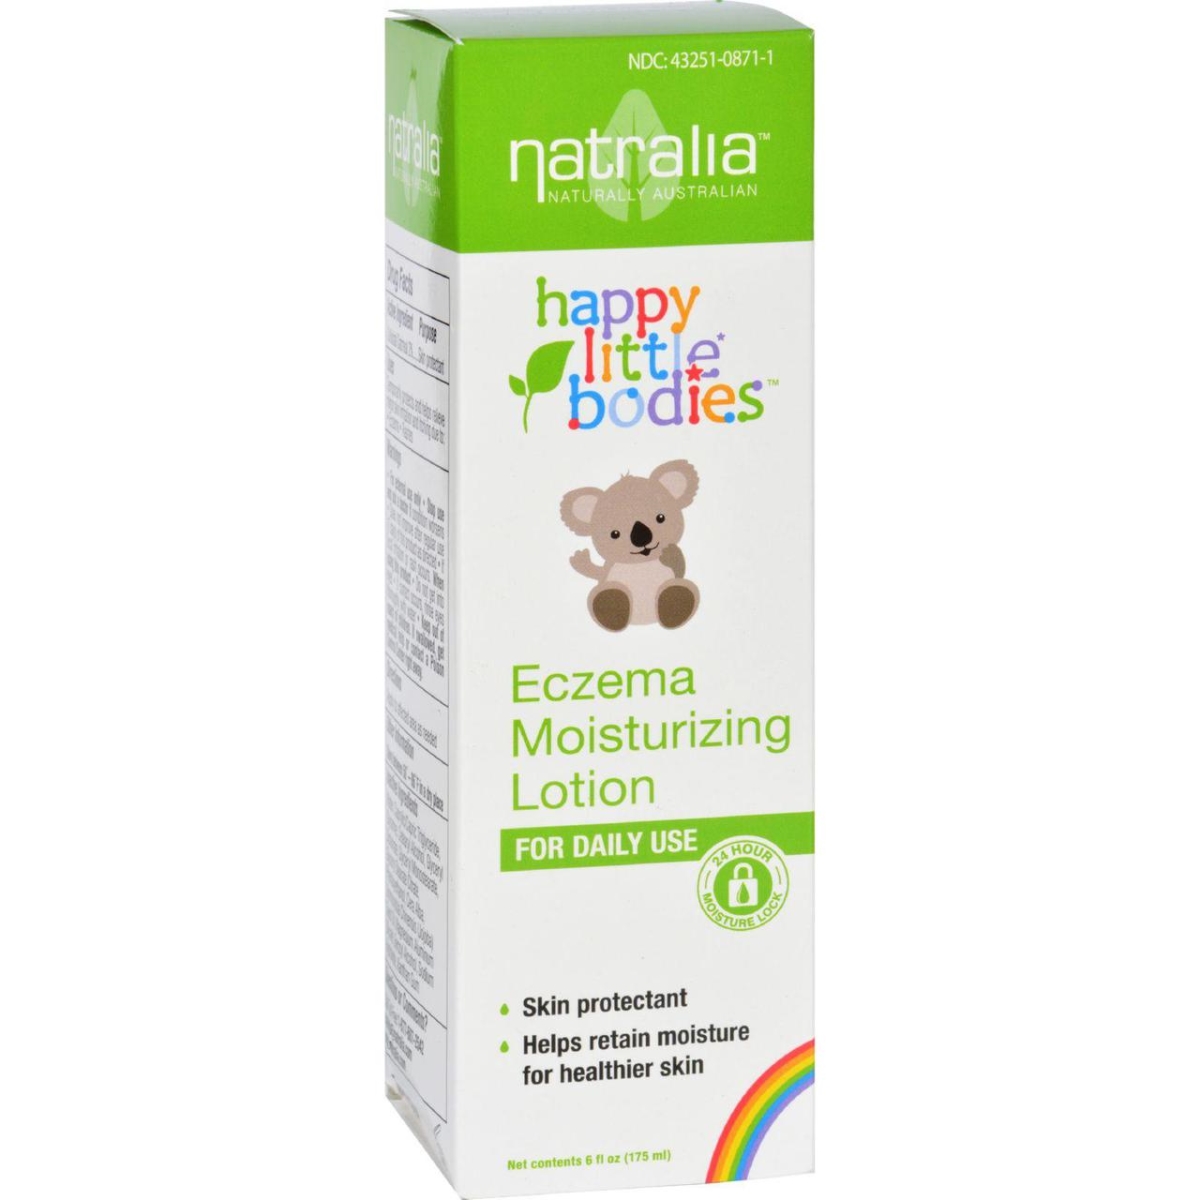 Hg1712165 6 Oz Moisturizing Happy Little Bodies Eczema Lotion - Natralia